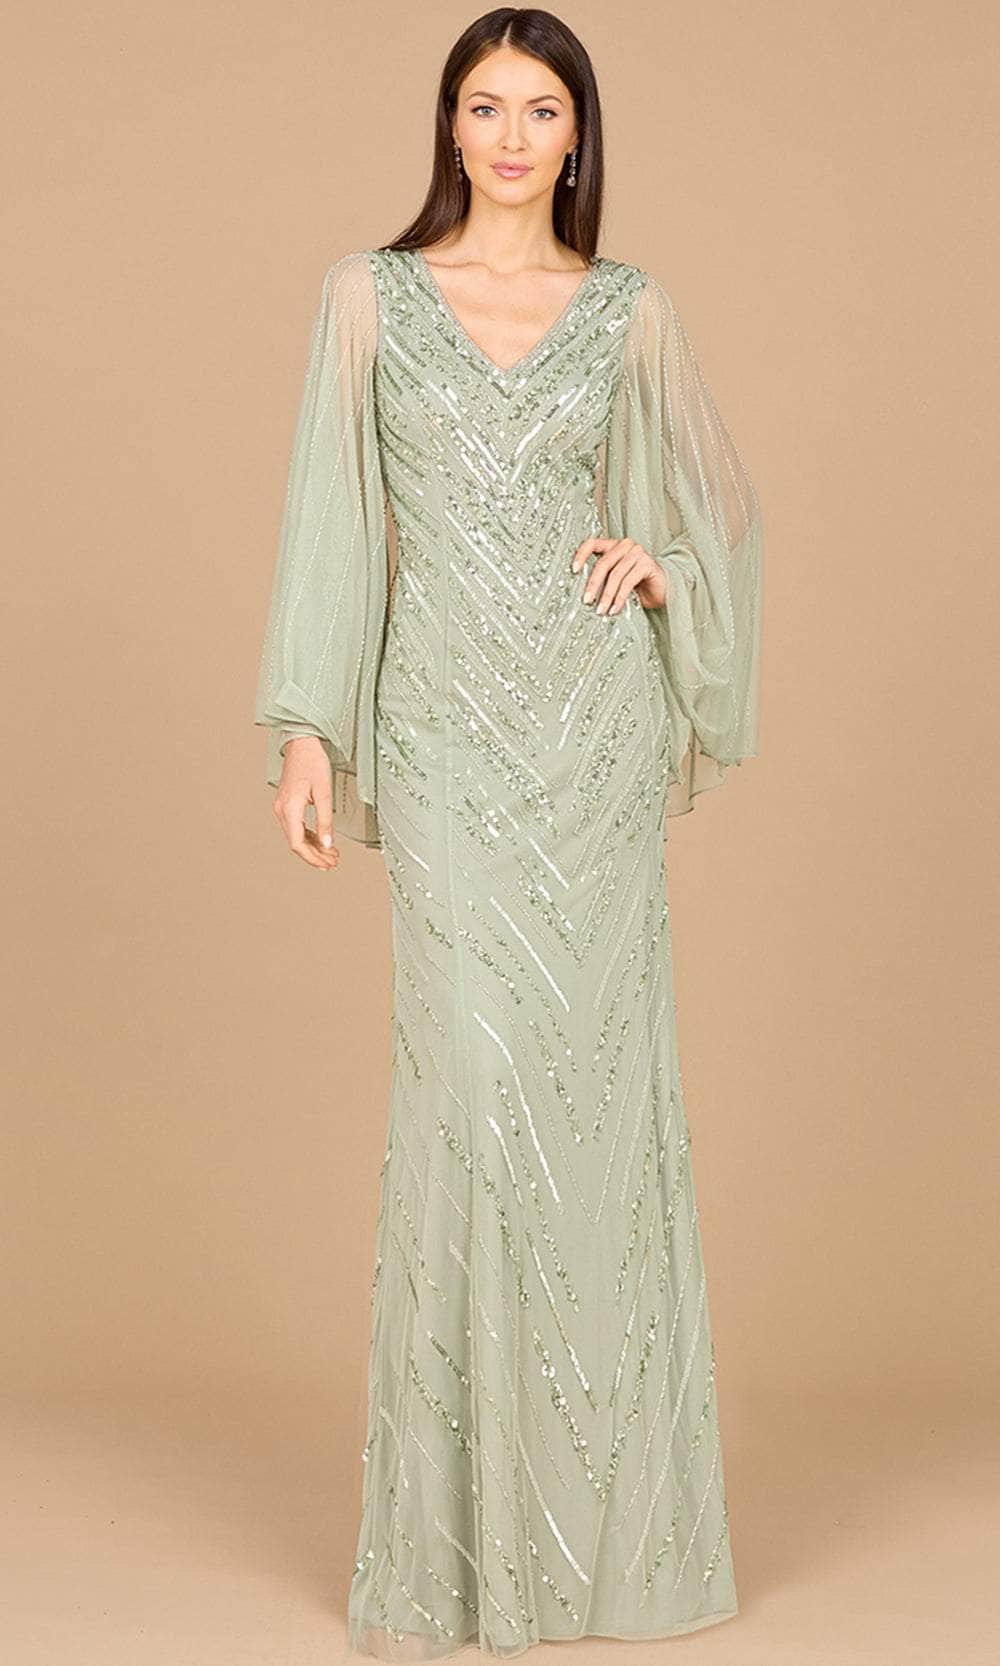 Lara Dresses 29082 - Embellished Sheath Evening Gown
